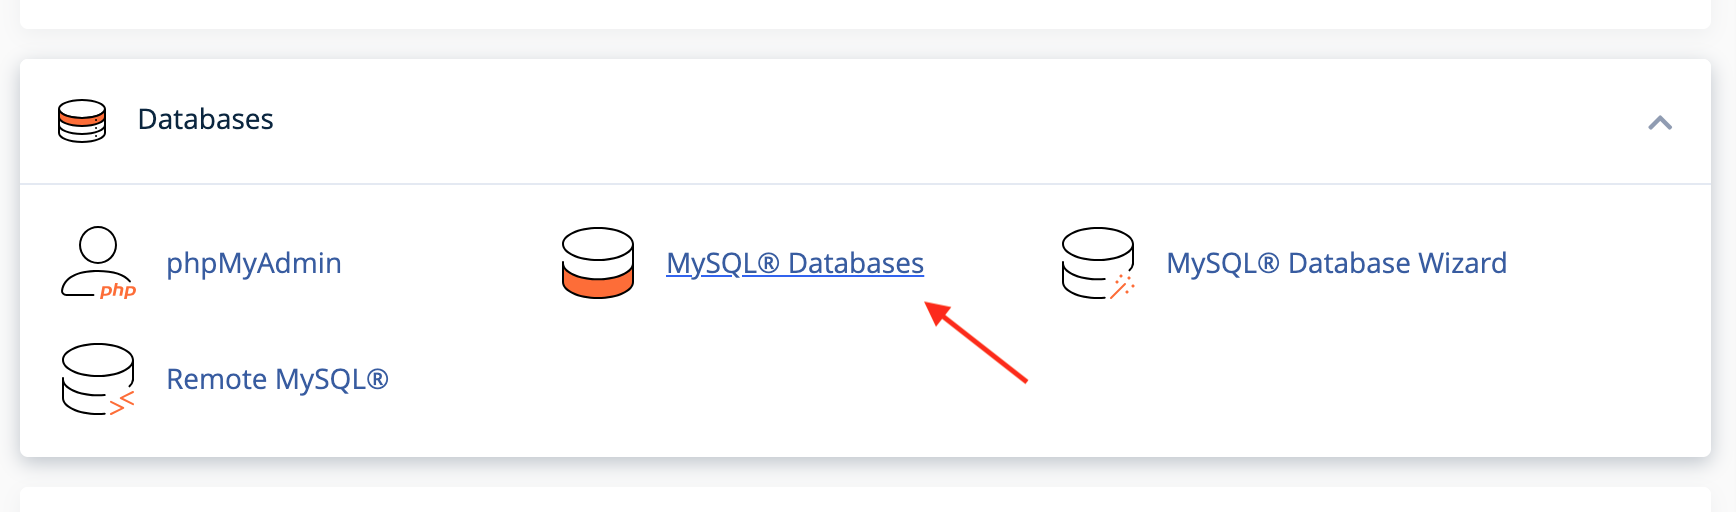 cPanel MySQL Databases icon